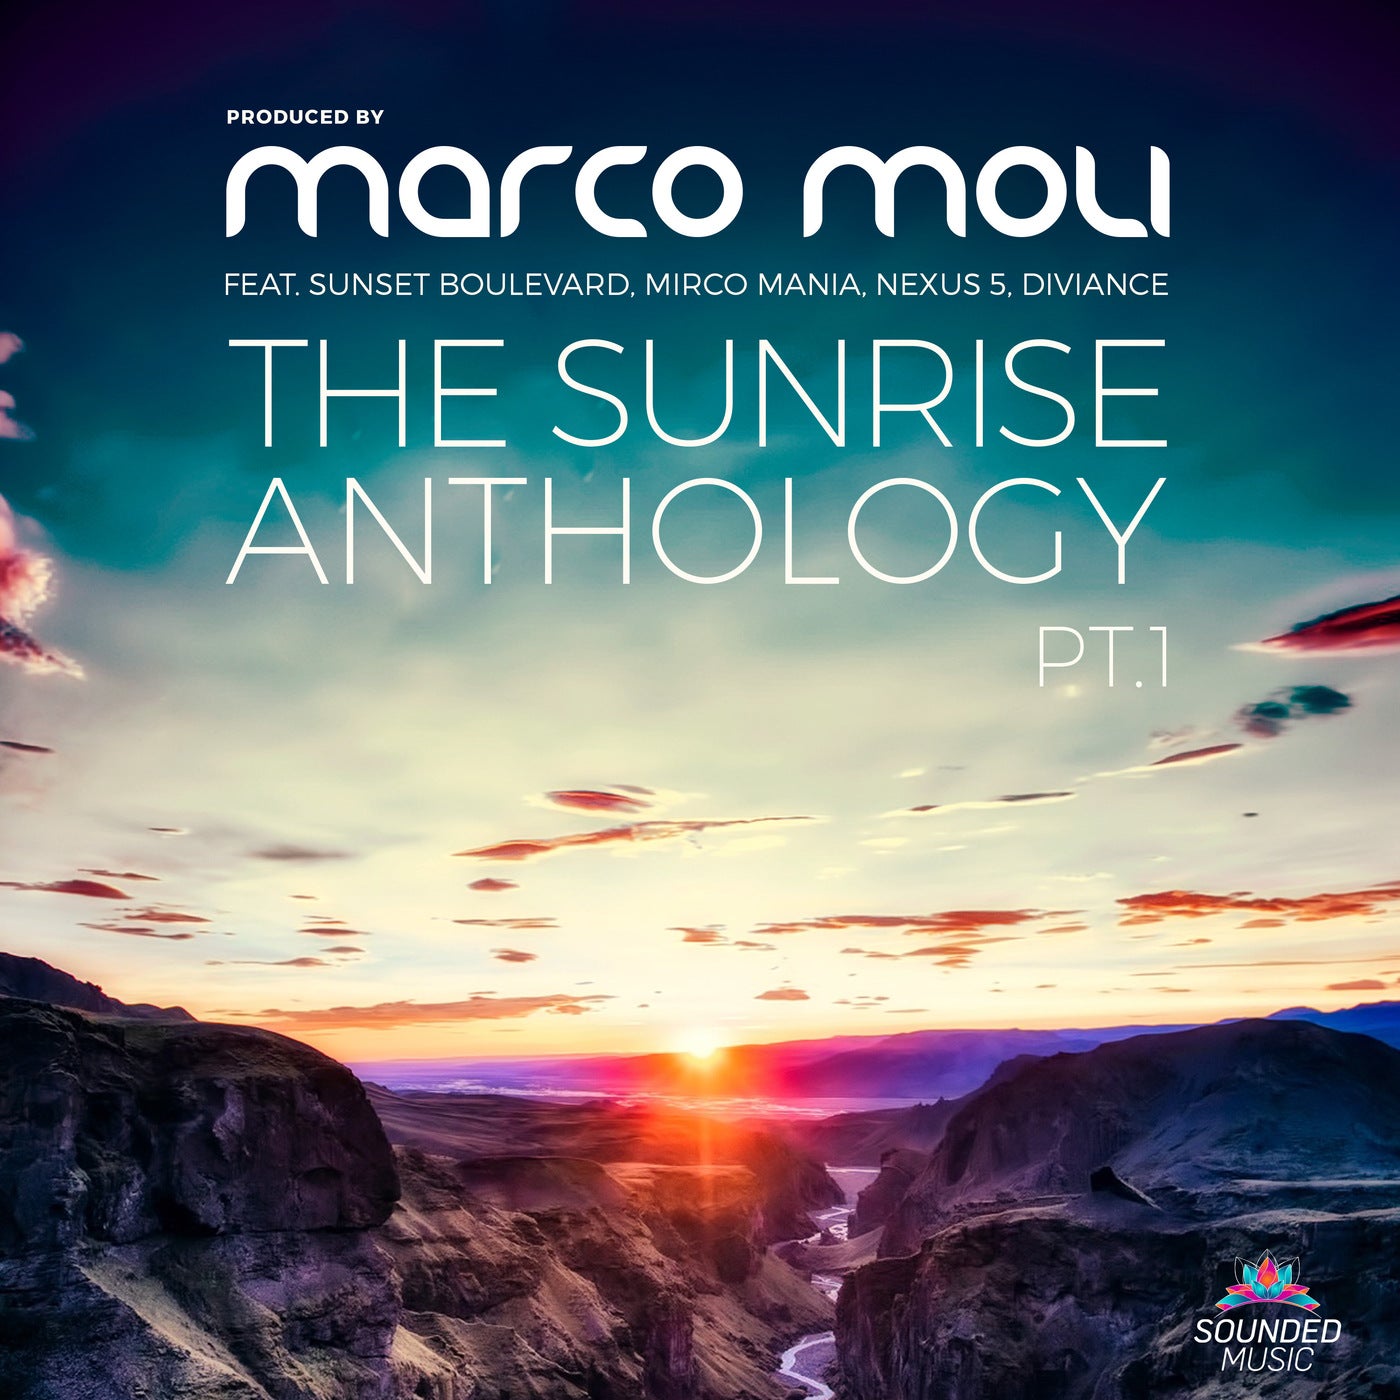 The Sunrise Anthology, Pt. 1 (presented by Marco Moli)